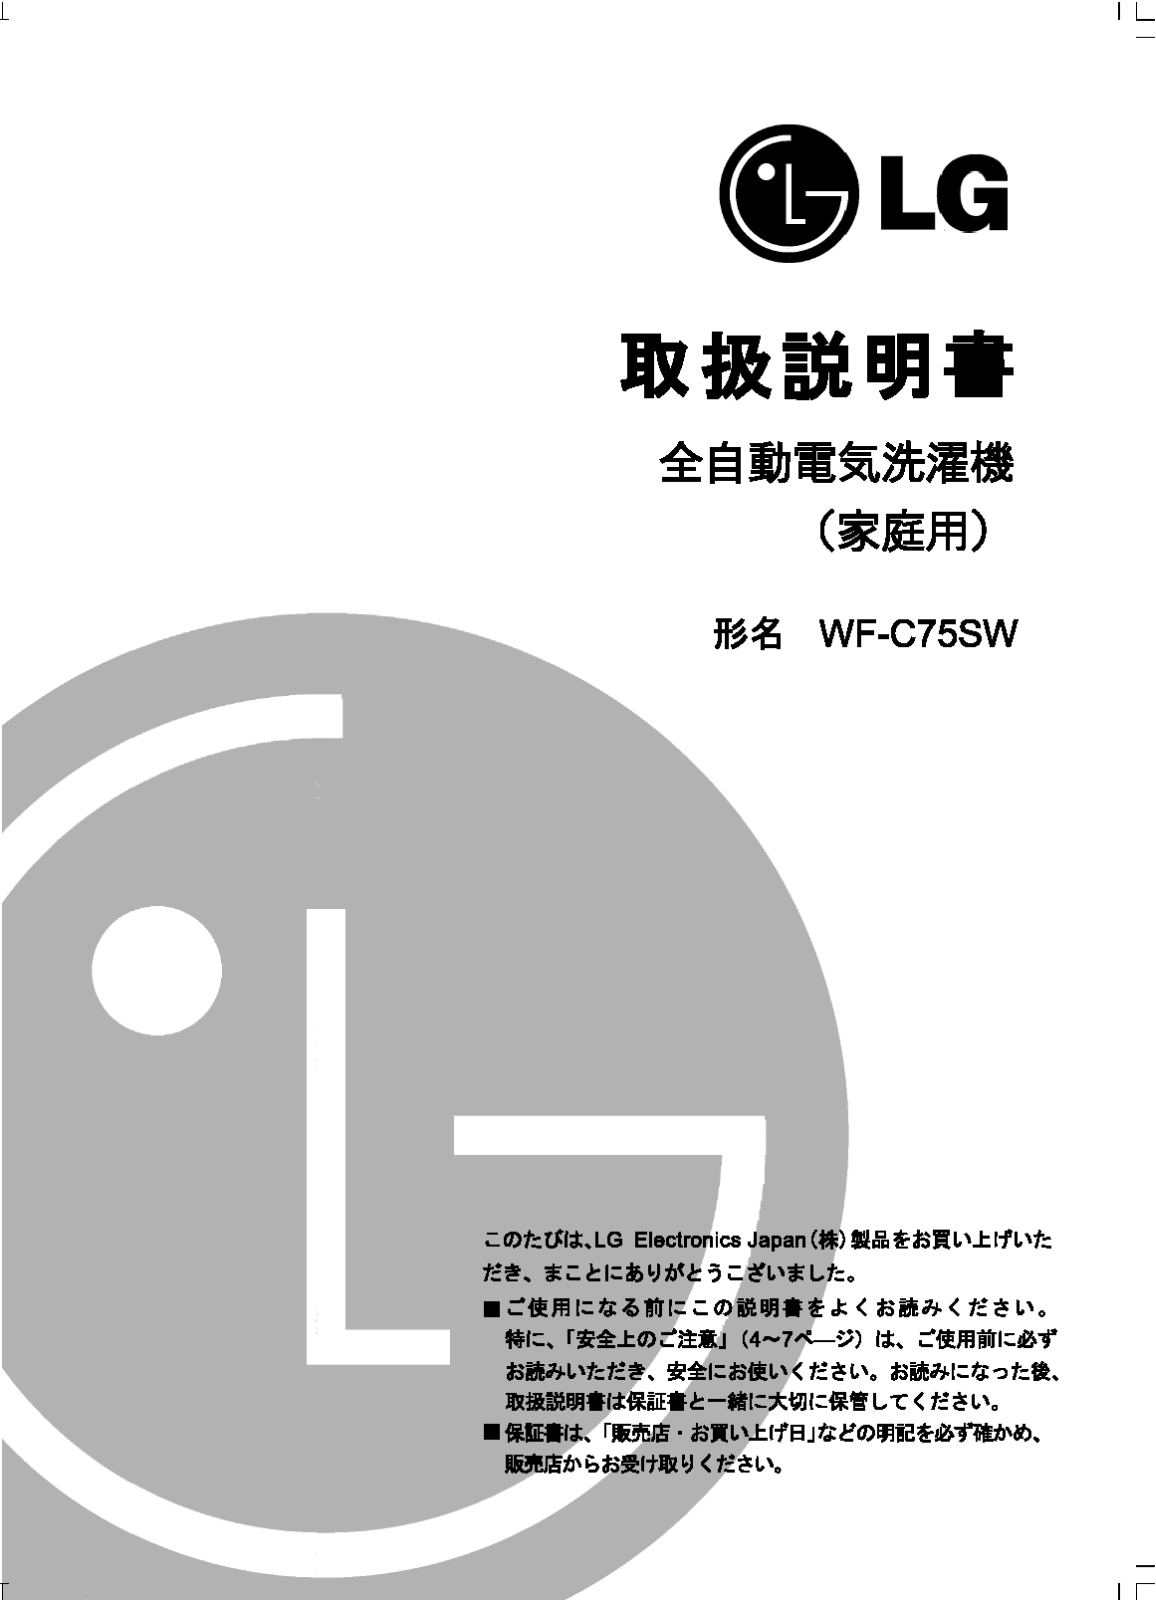 LG WF-T75WP instruction manual